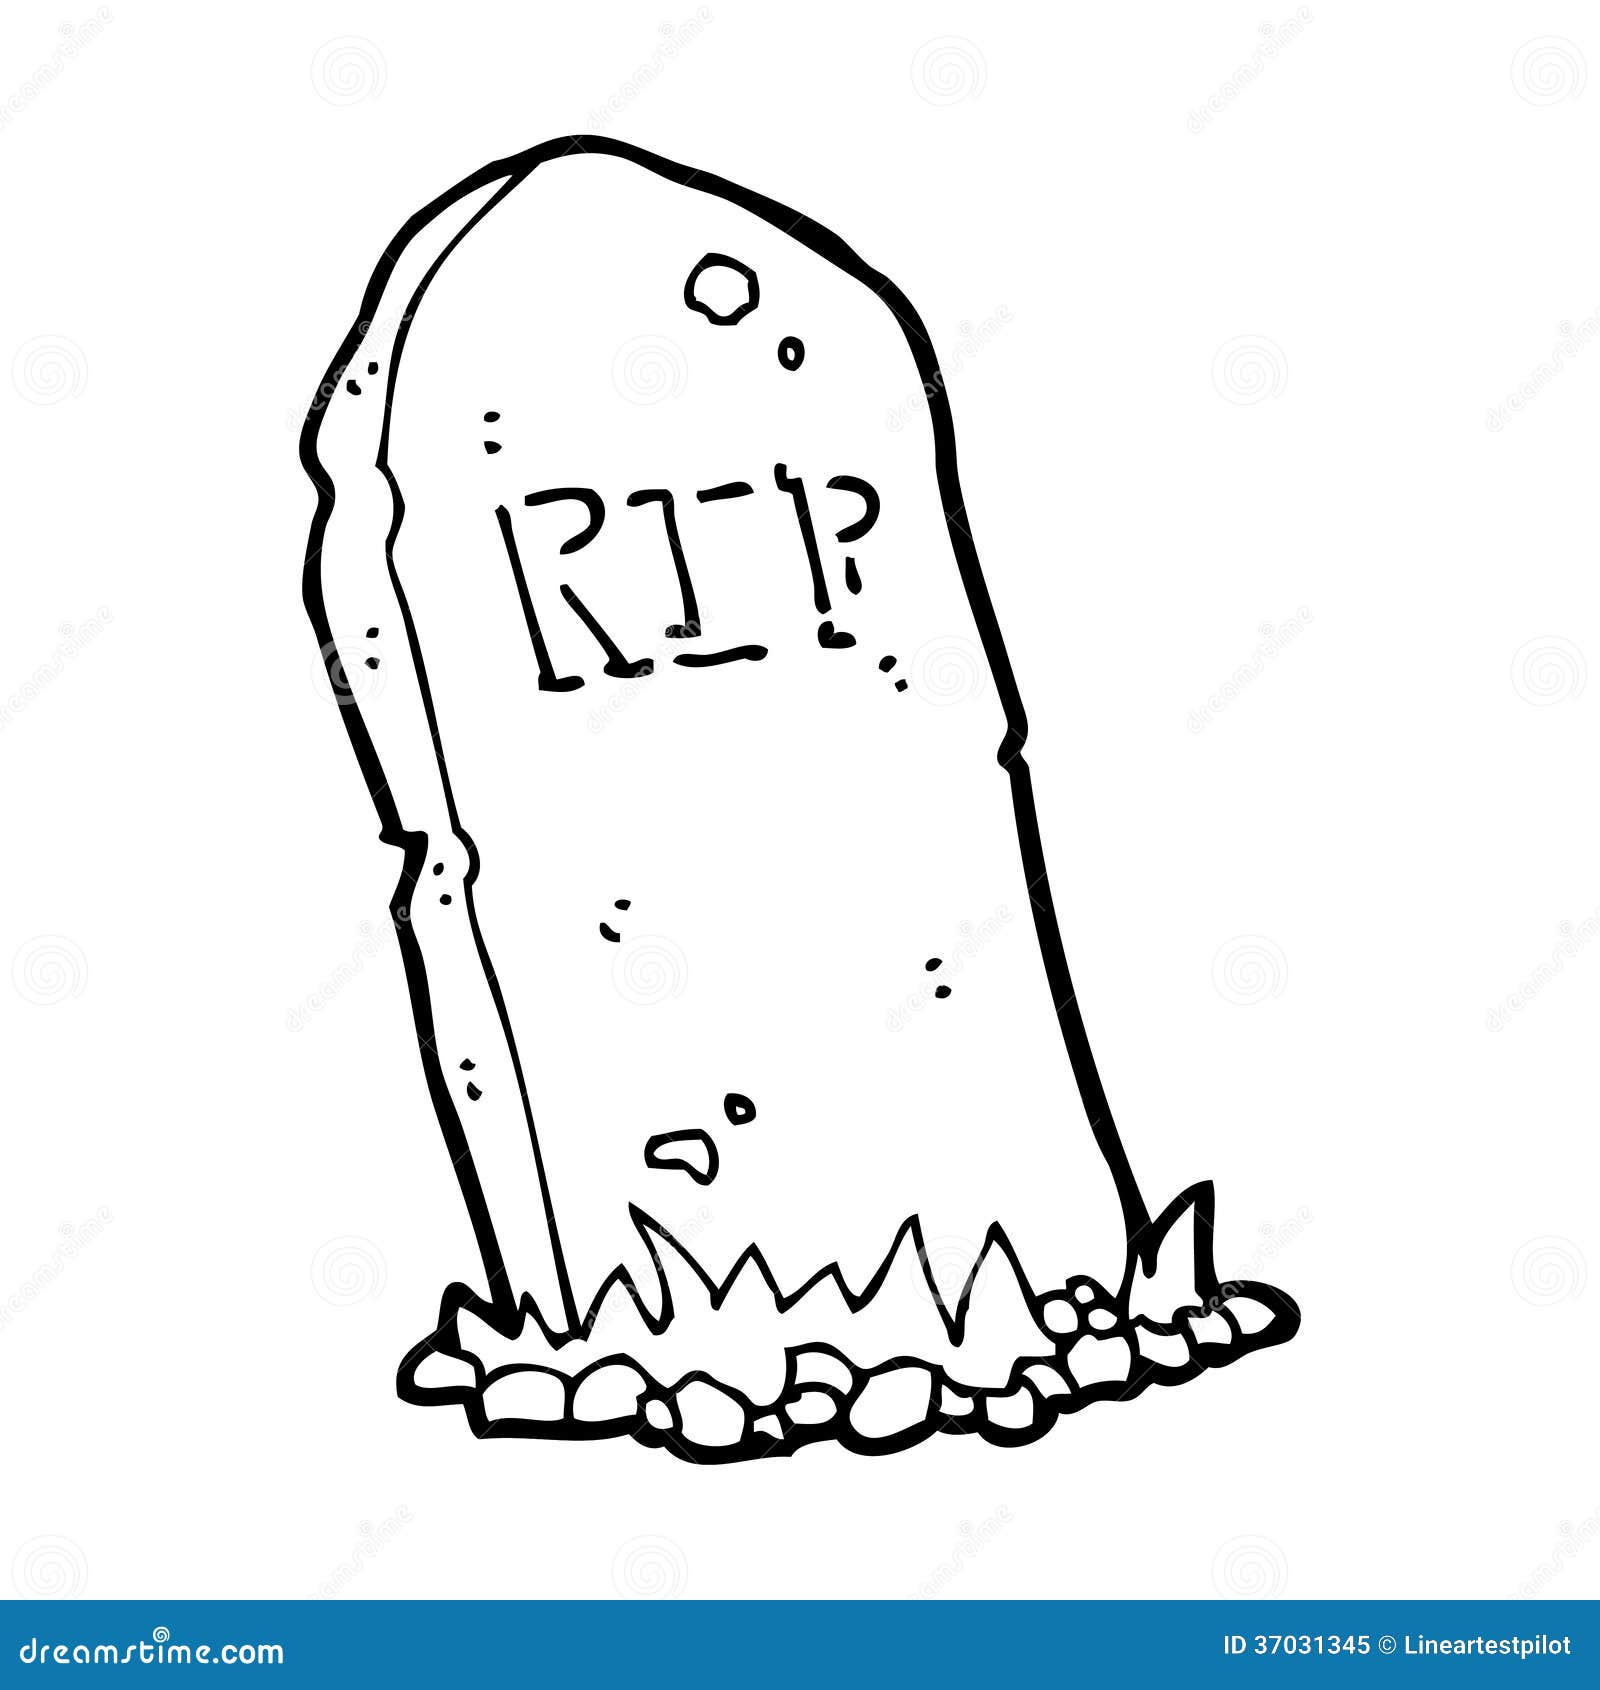 Cartoon Spooky Grave Royalty Free Stock Photo - Image: 37031345